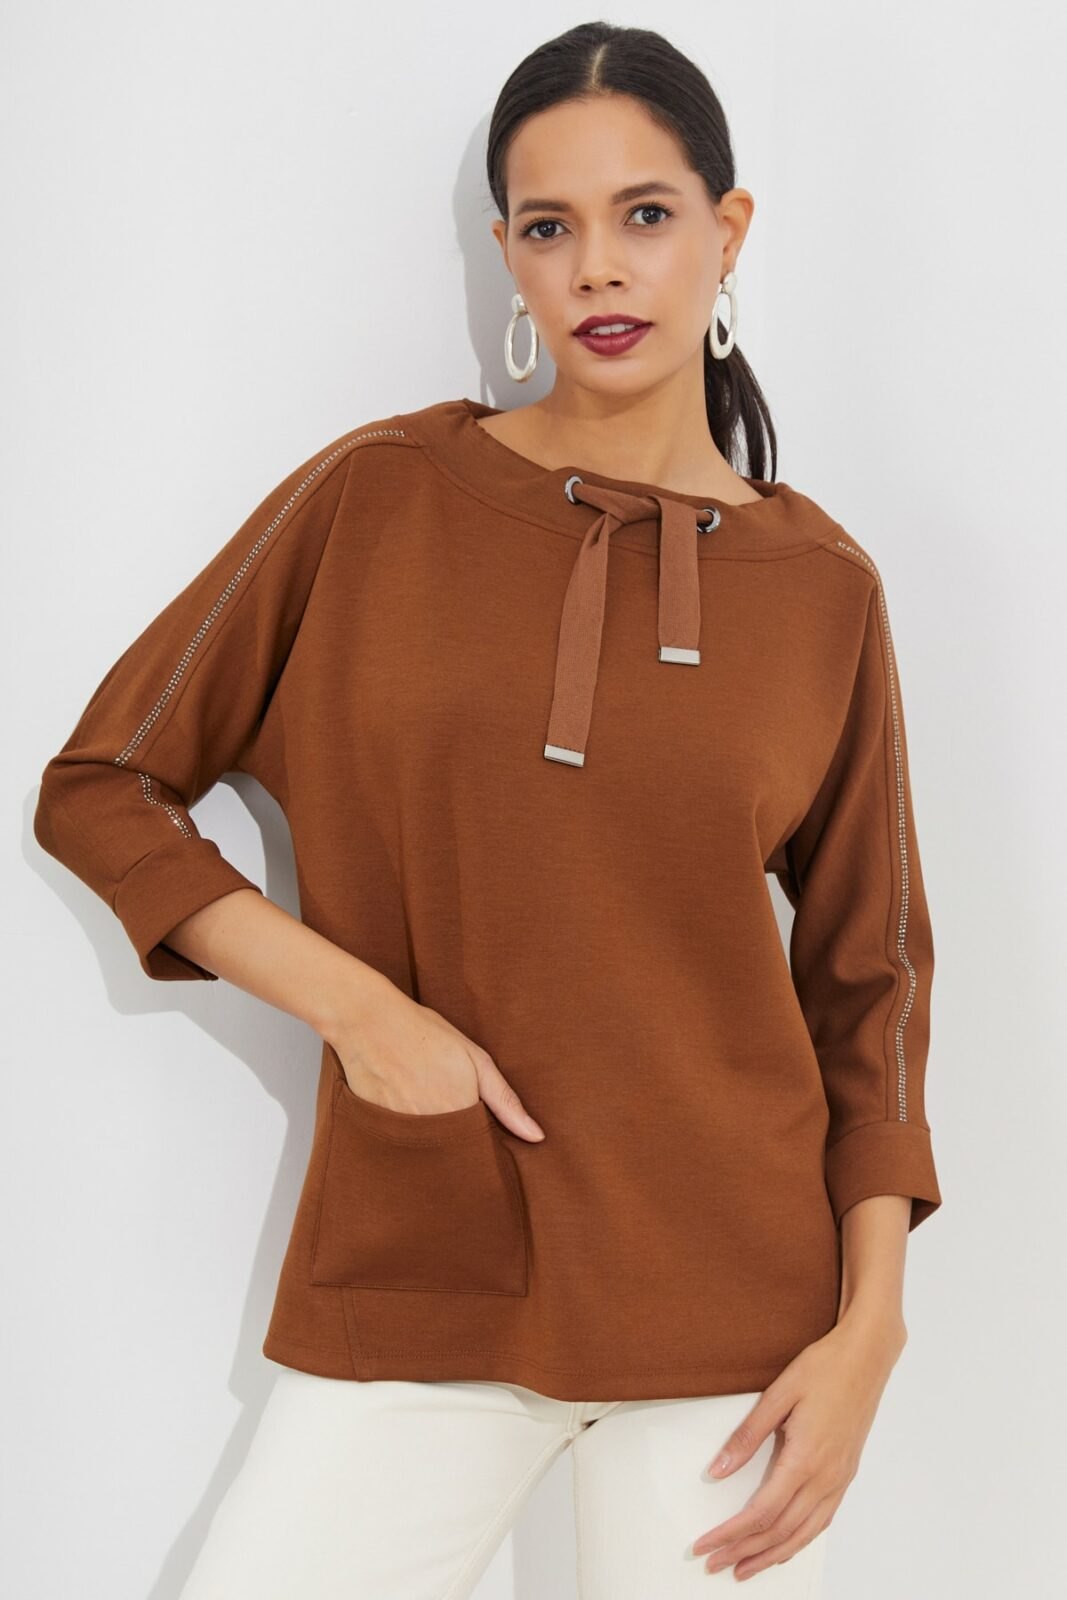 Cool & Sexy Sweatshirt - Brown